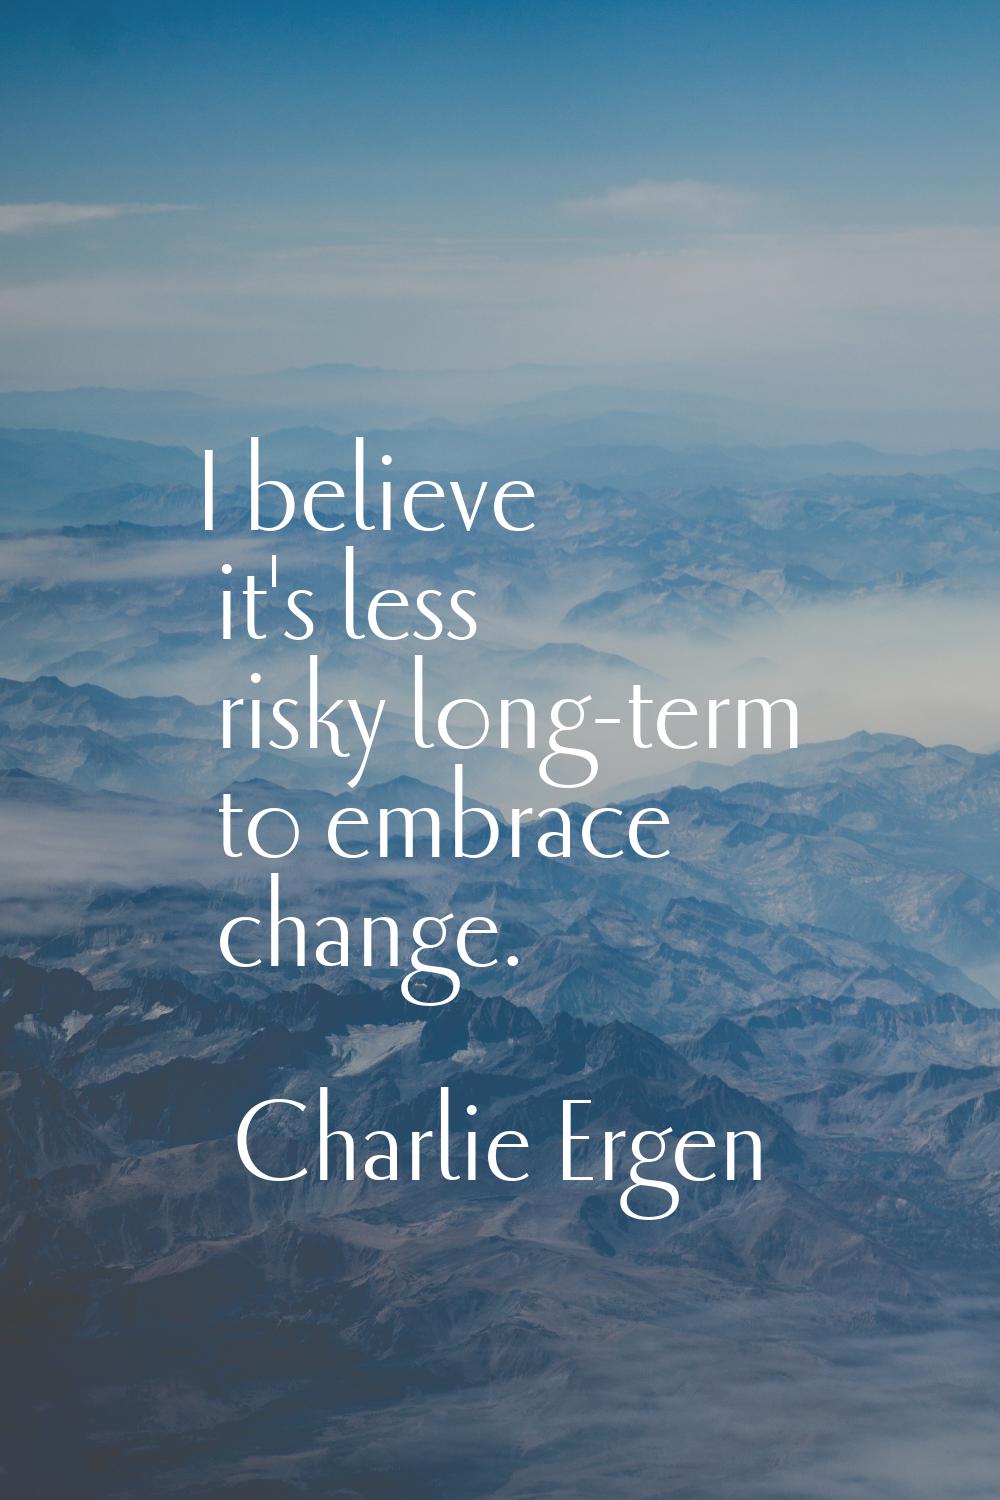 I believe it's less risky long-term to embrace change.